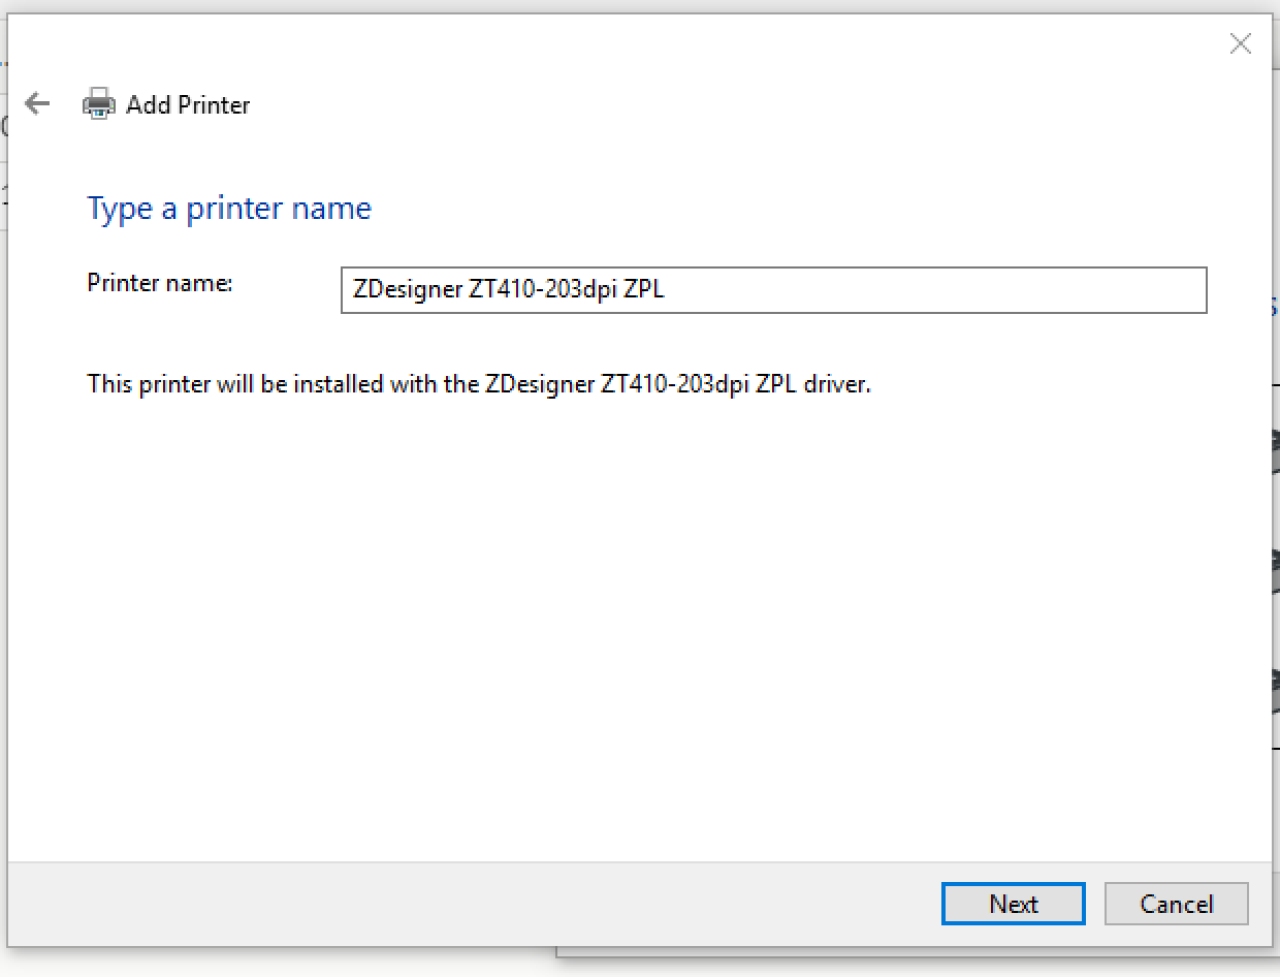 Type a printer name screen